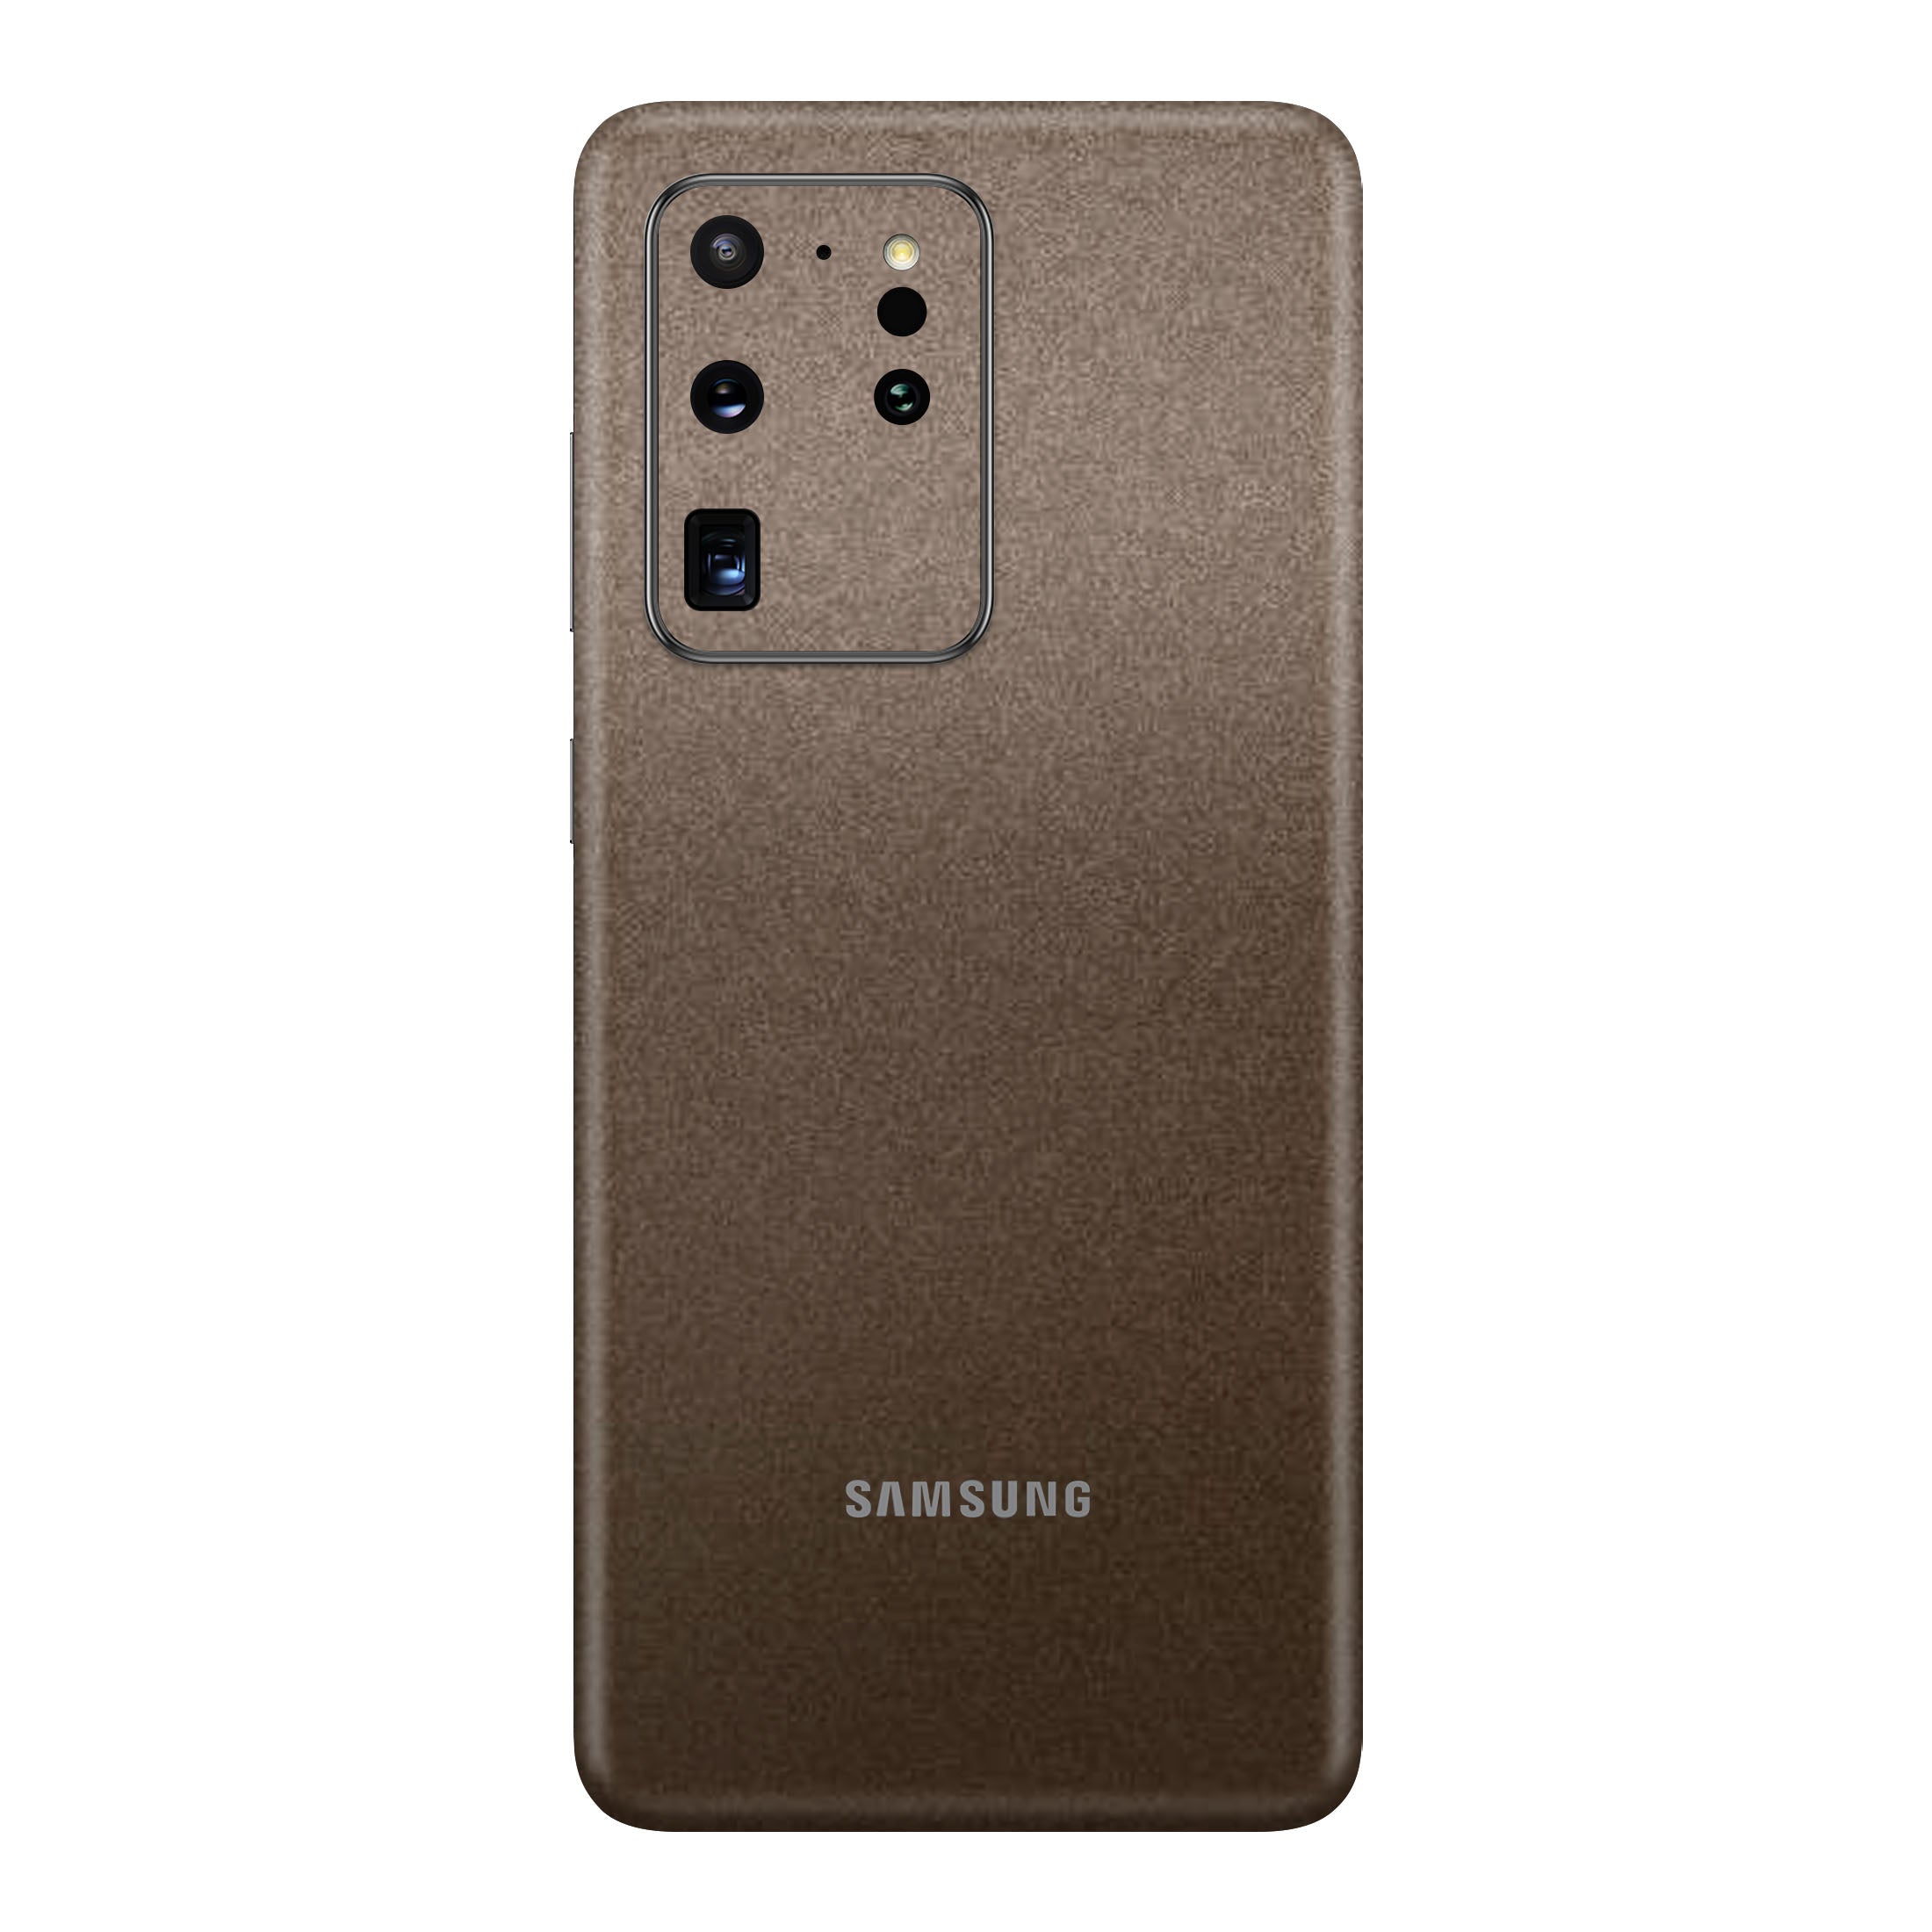 Matte Brown Metallic Skin for Samsung S20 Ultra